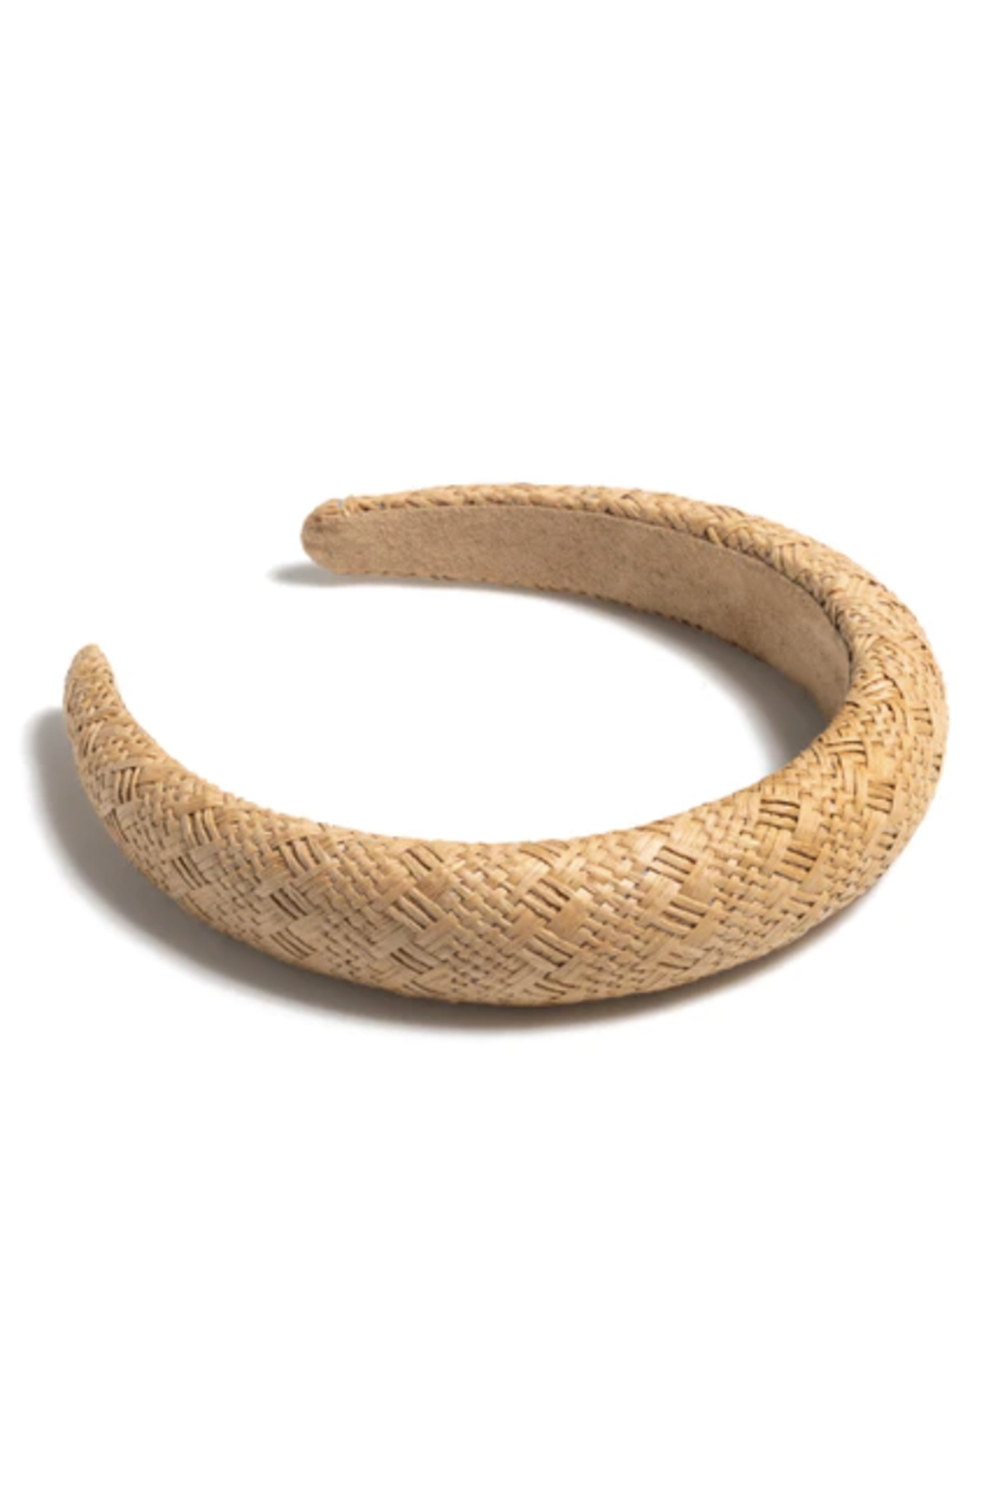 Fashion Women's Headband - Padded Straw Natural